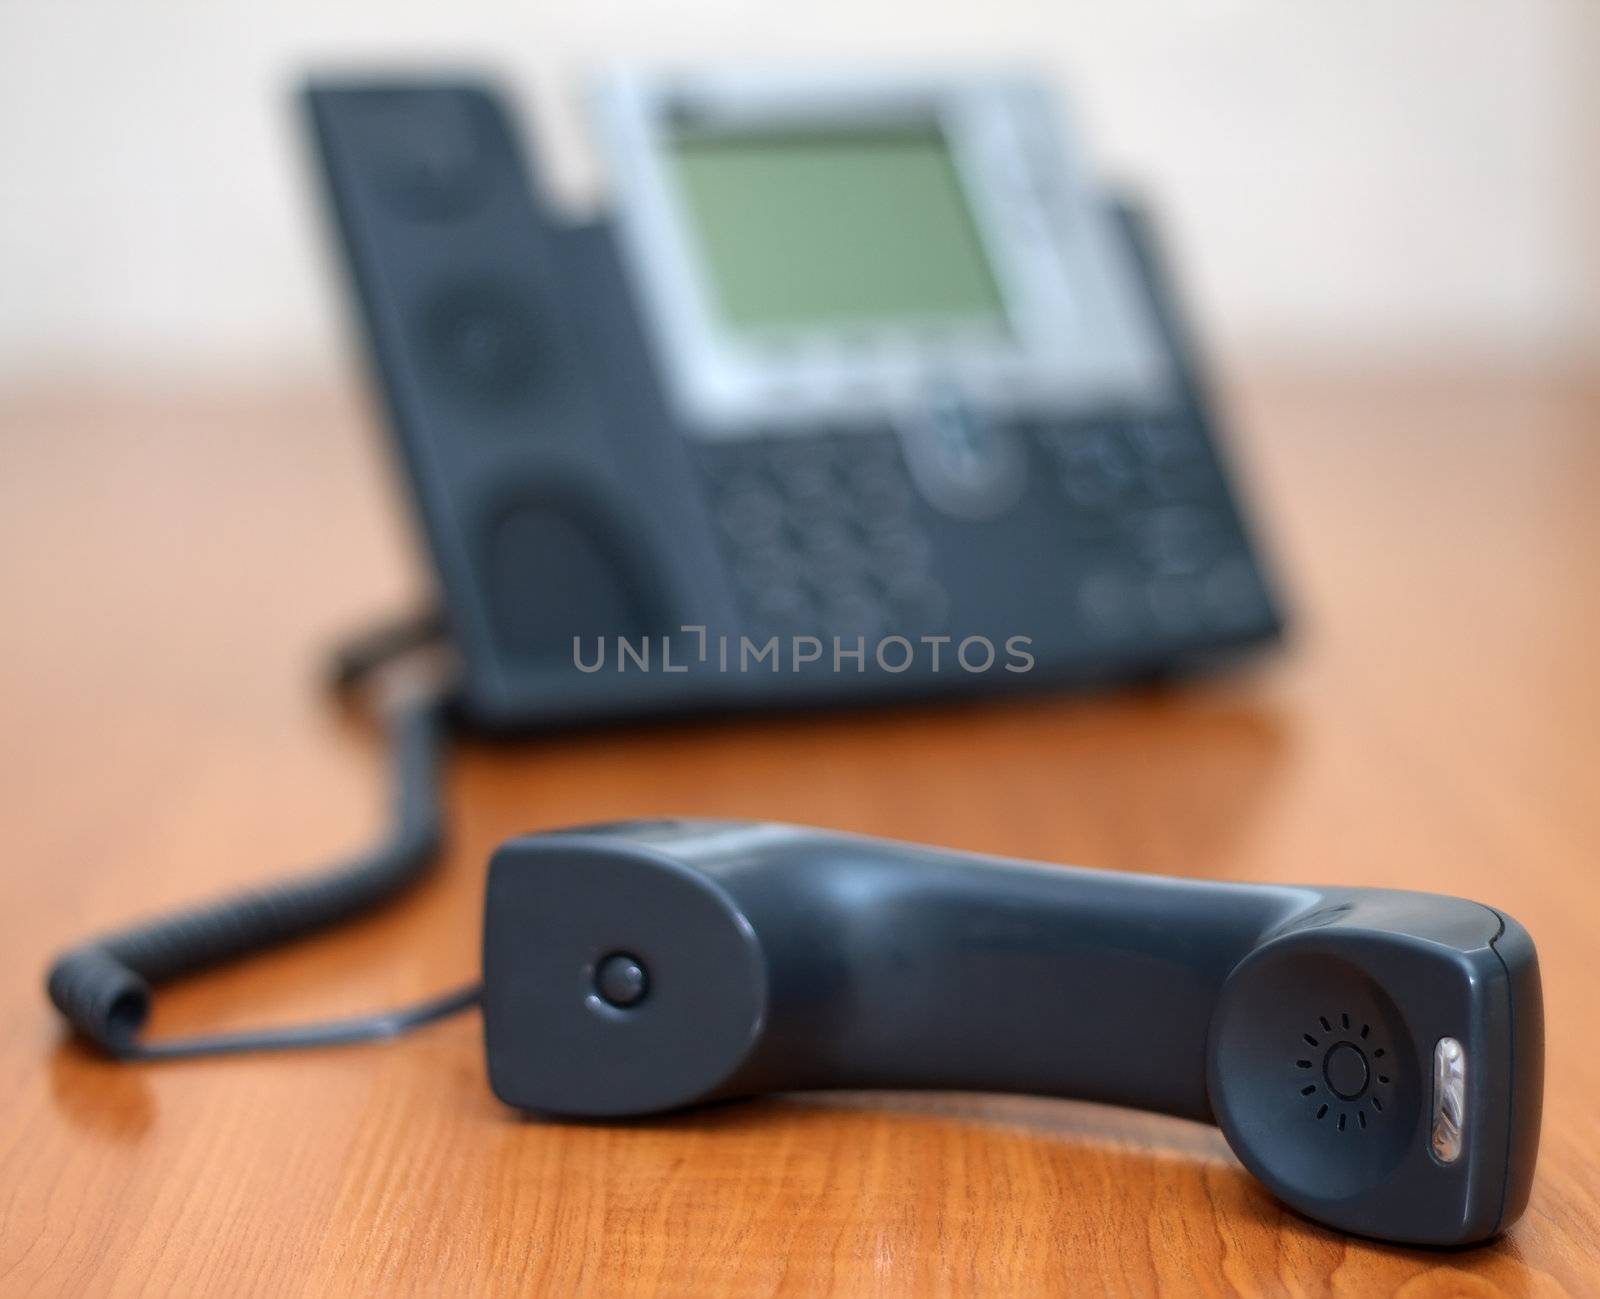 Telephone receiver with phone on background by Gdolgikh